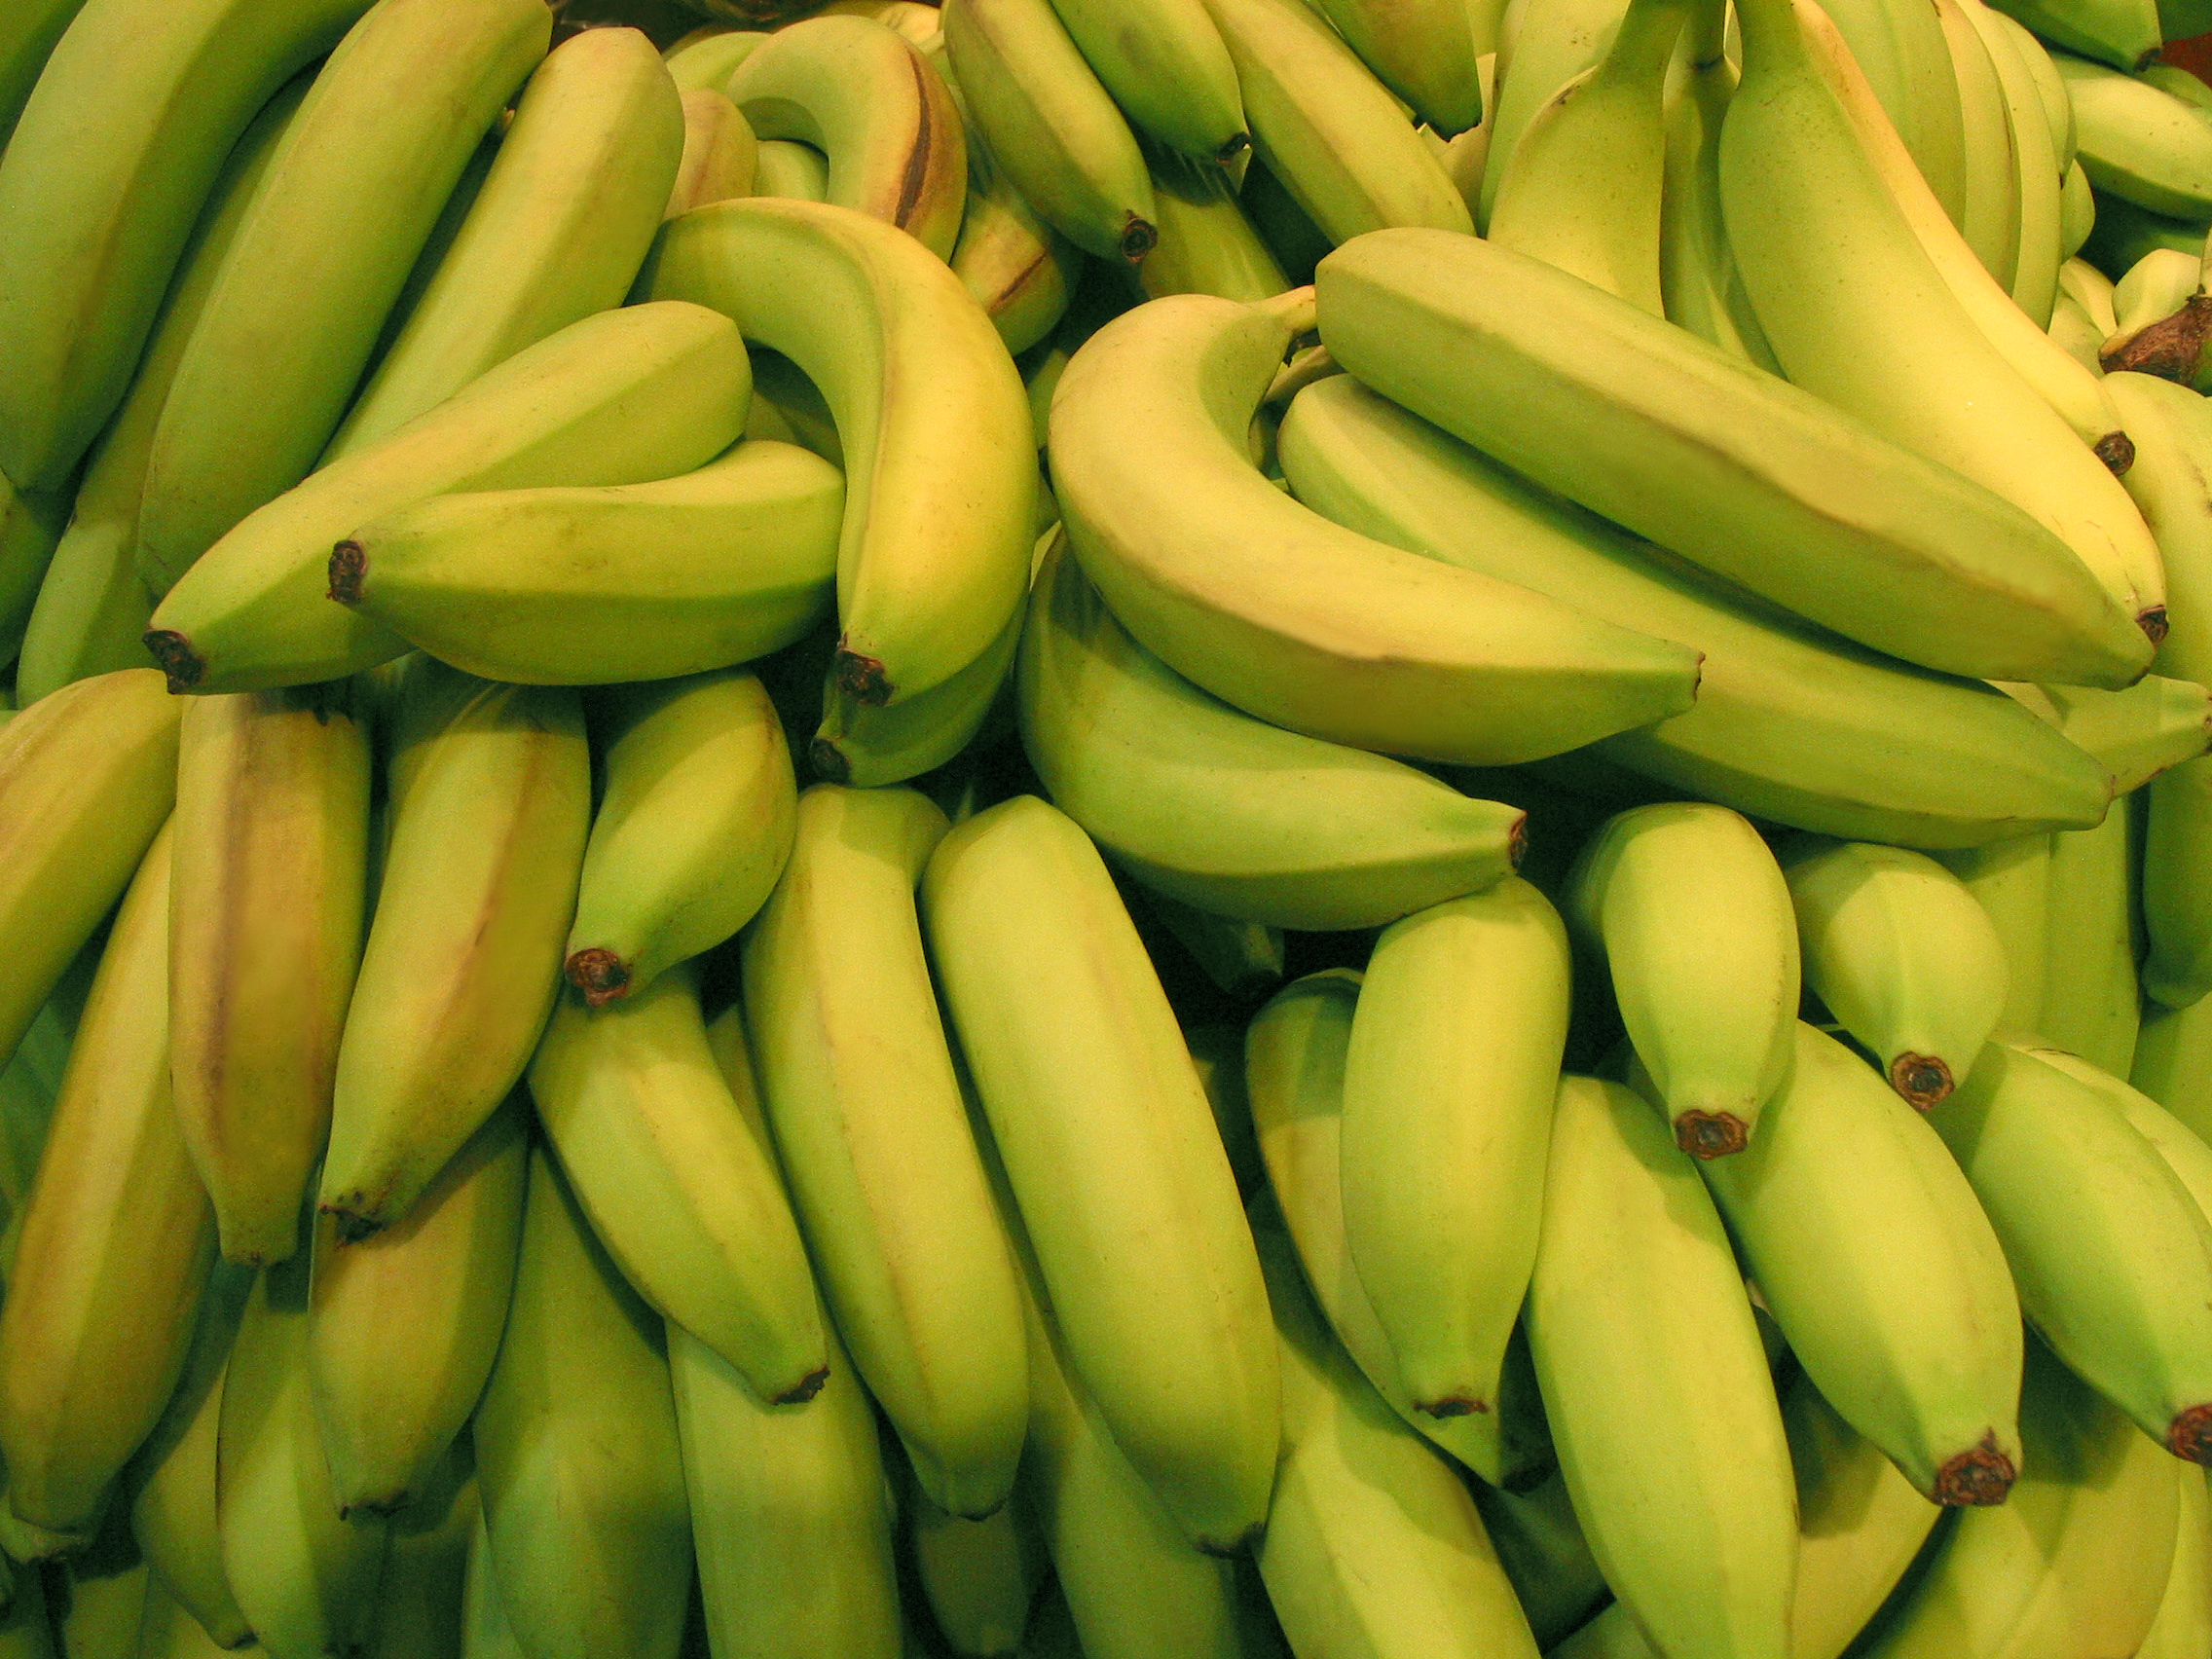 FREE Green Banana Photo, Fresh Bananas Image, Royalty-Free Fruit Stock ...